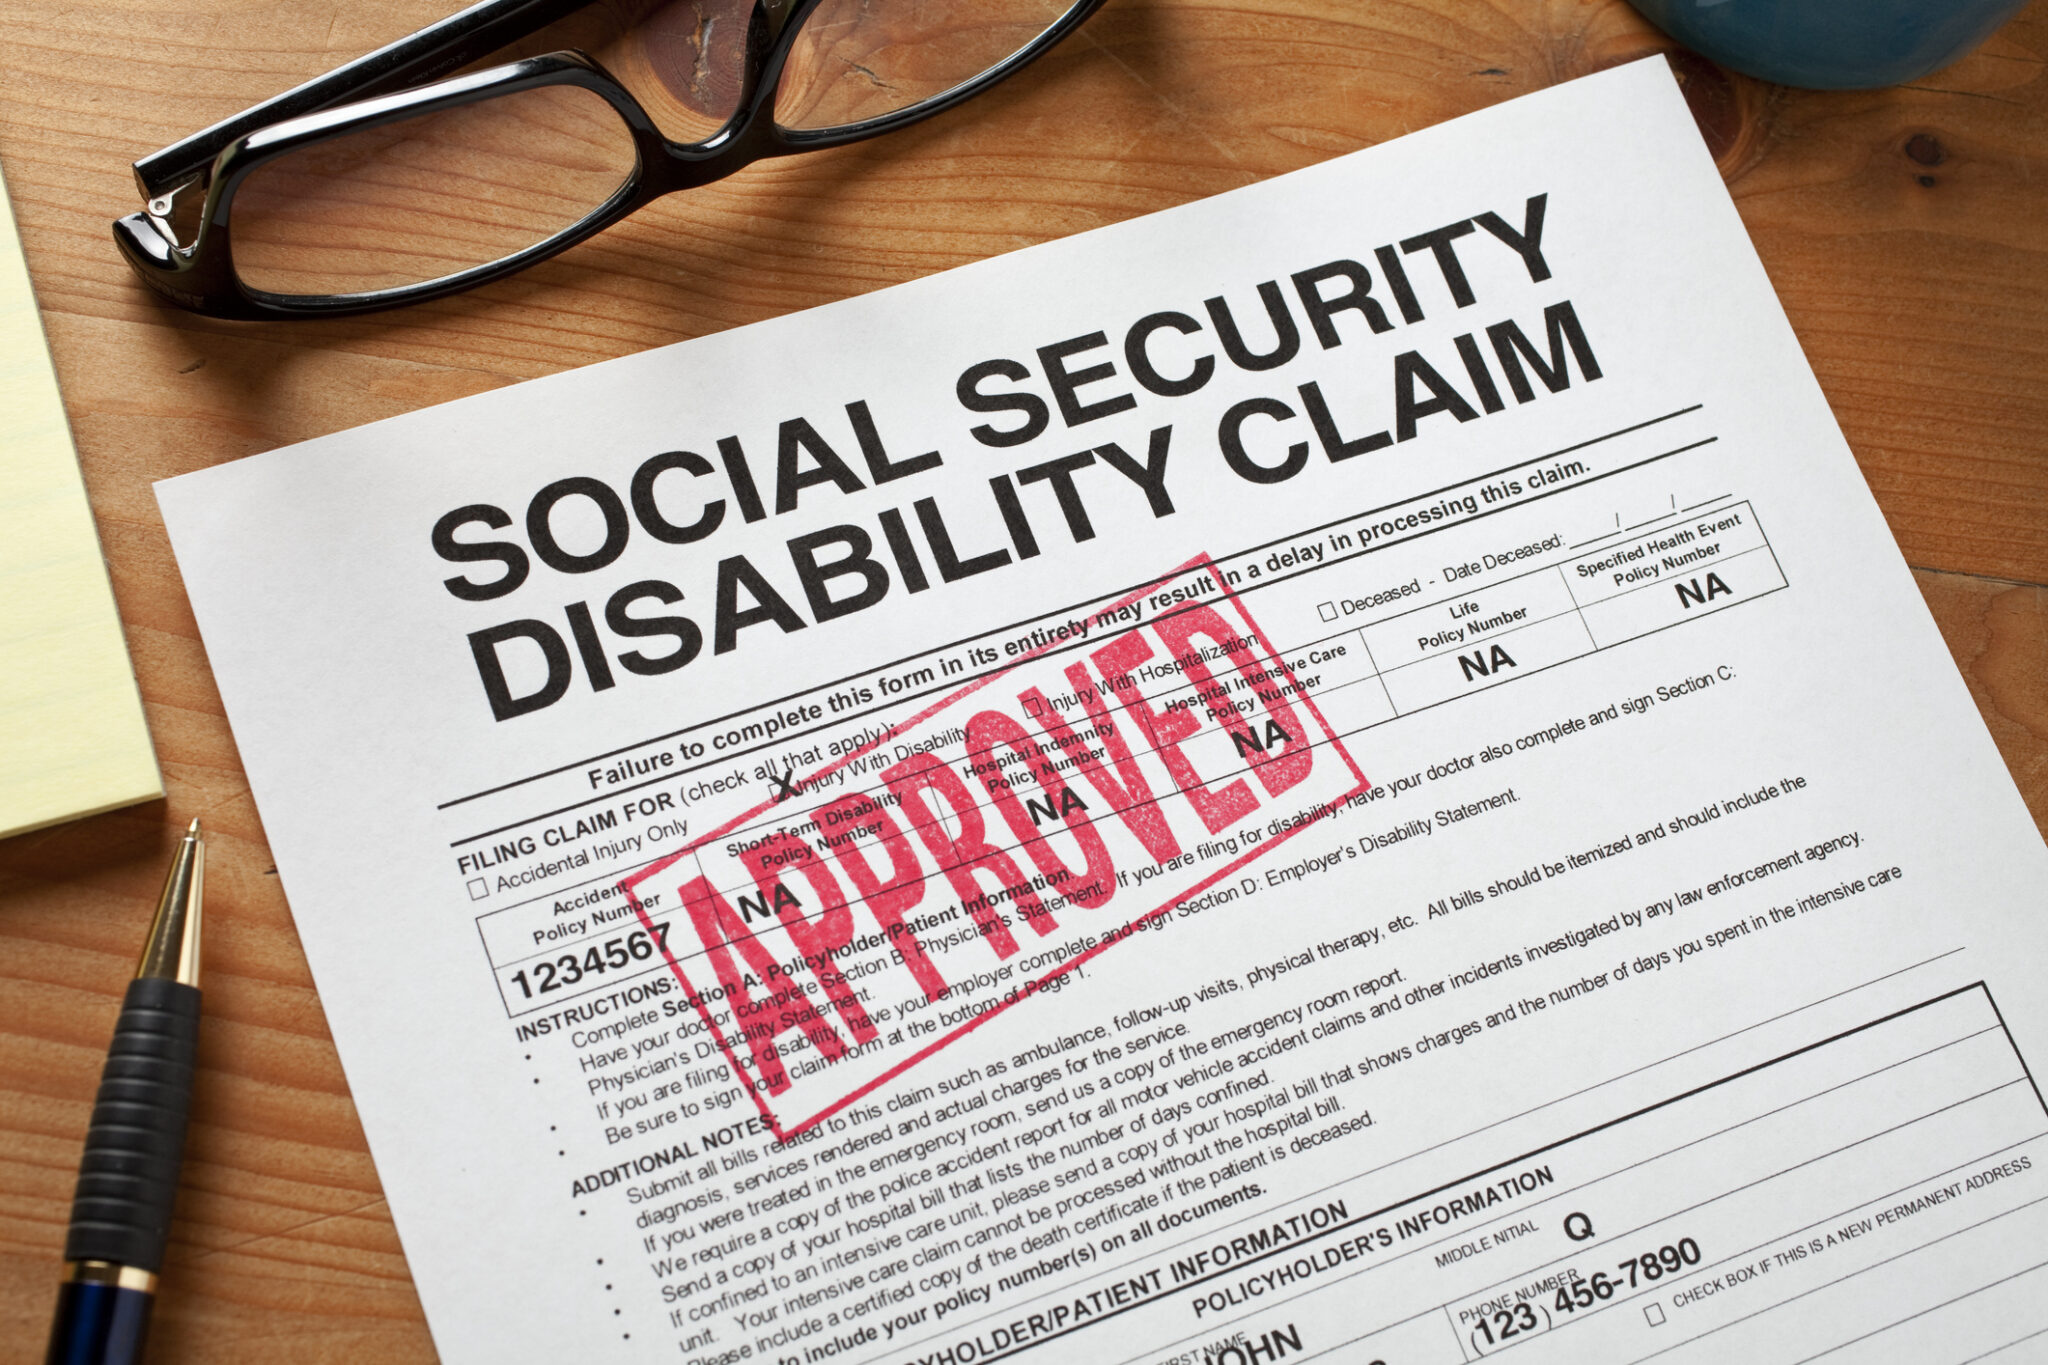 Social Security Disability Claim, Maryland, NY & NJ, USA